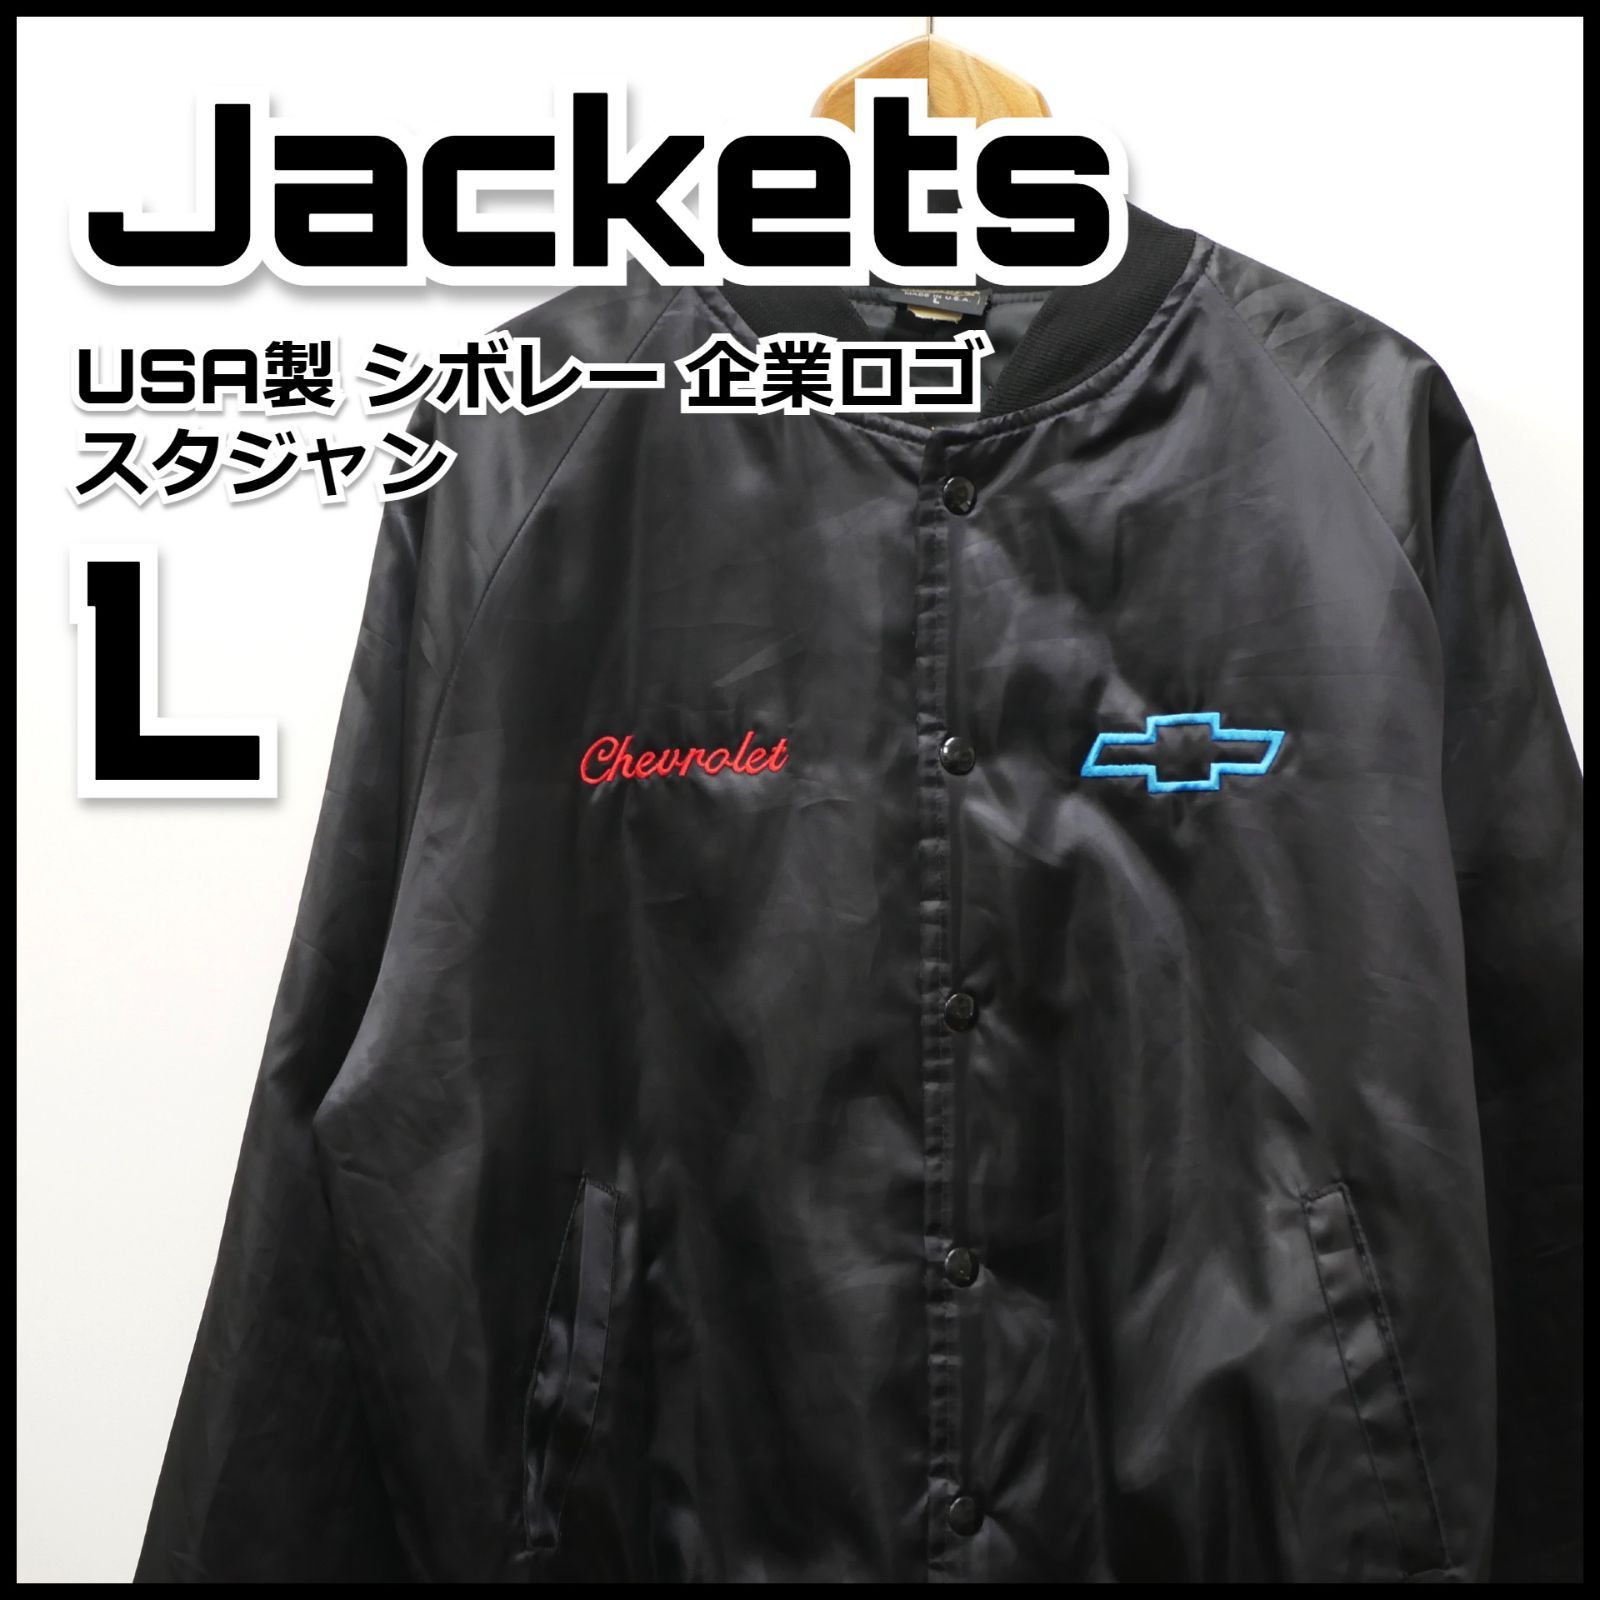 USA製 Jackets スタジャン シボレー 企業ロゴ 刺繍 L 古着 - 古服屋